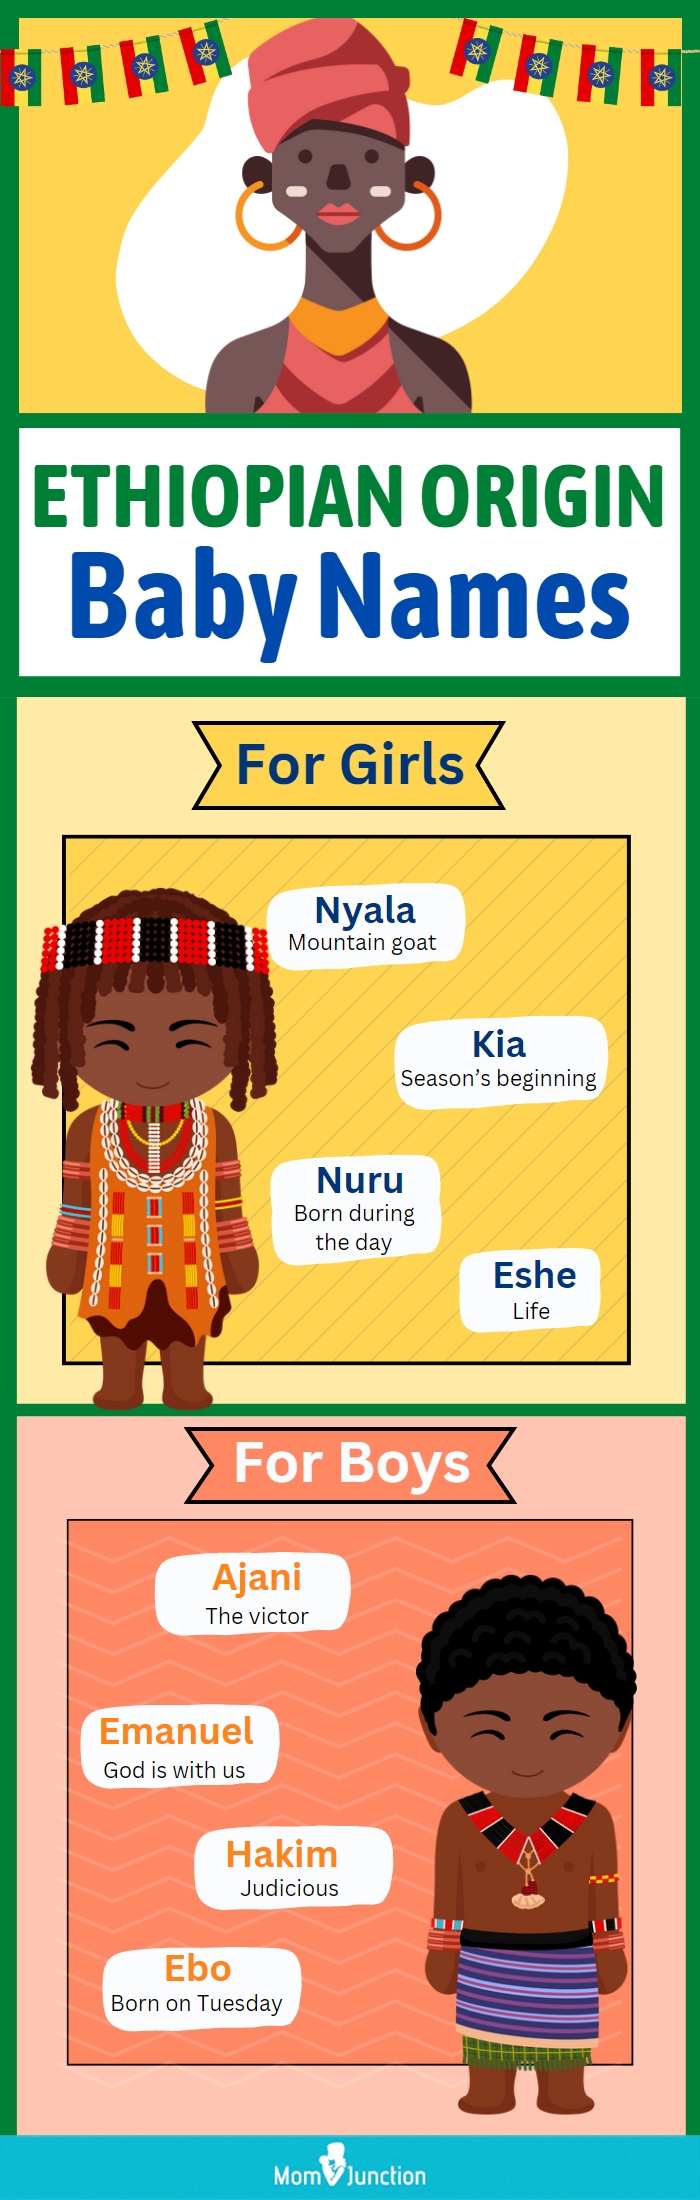 ethiopian origin baby names (infographic)